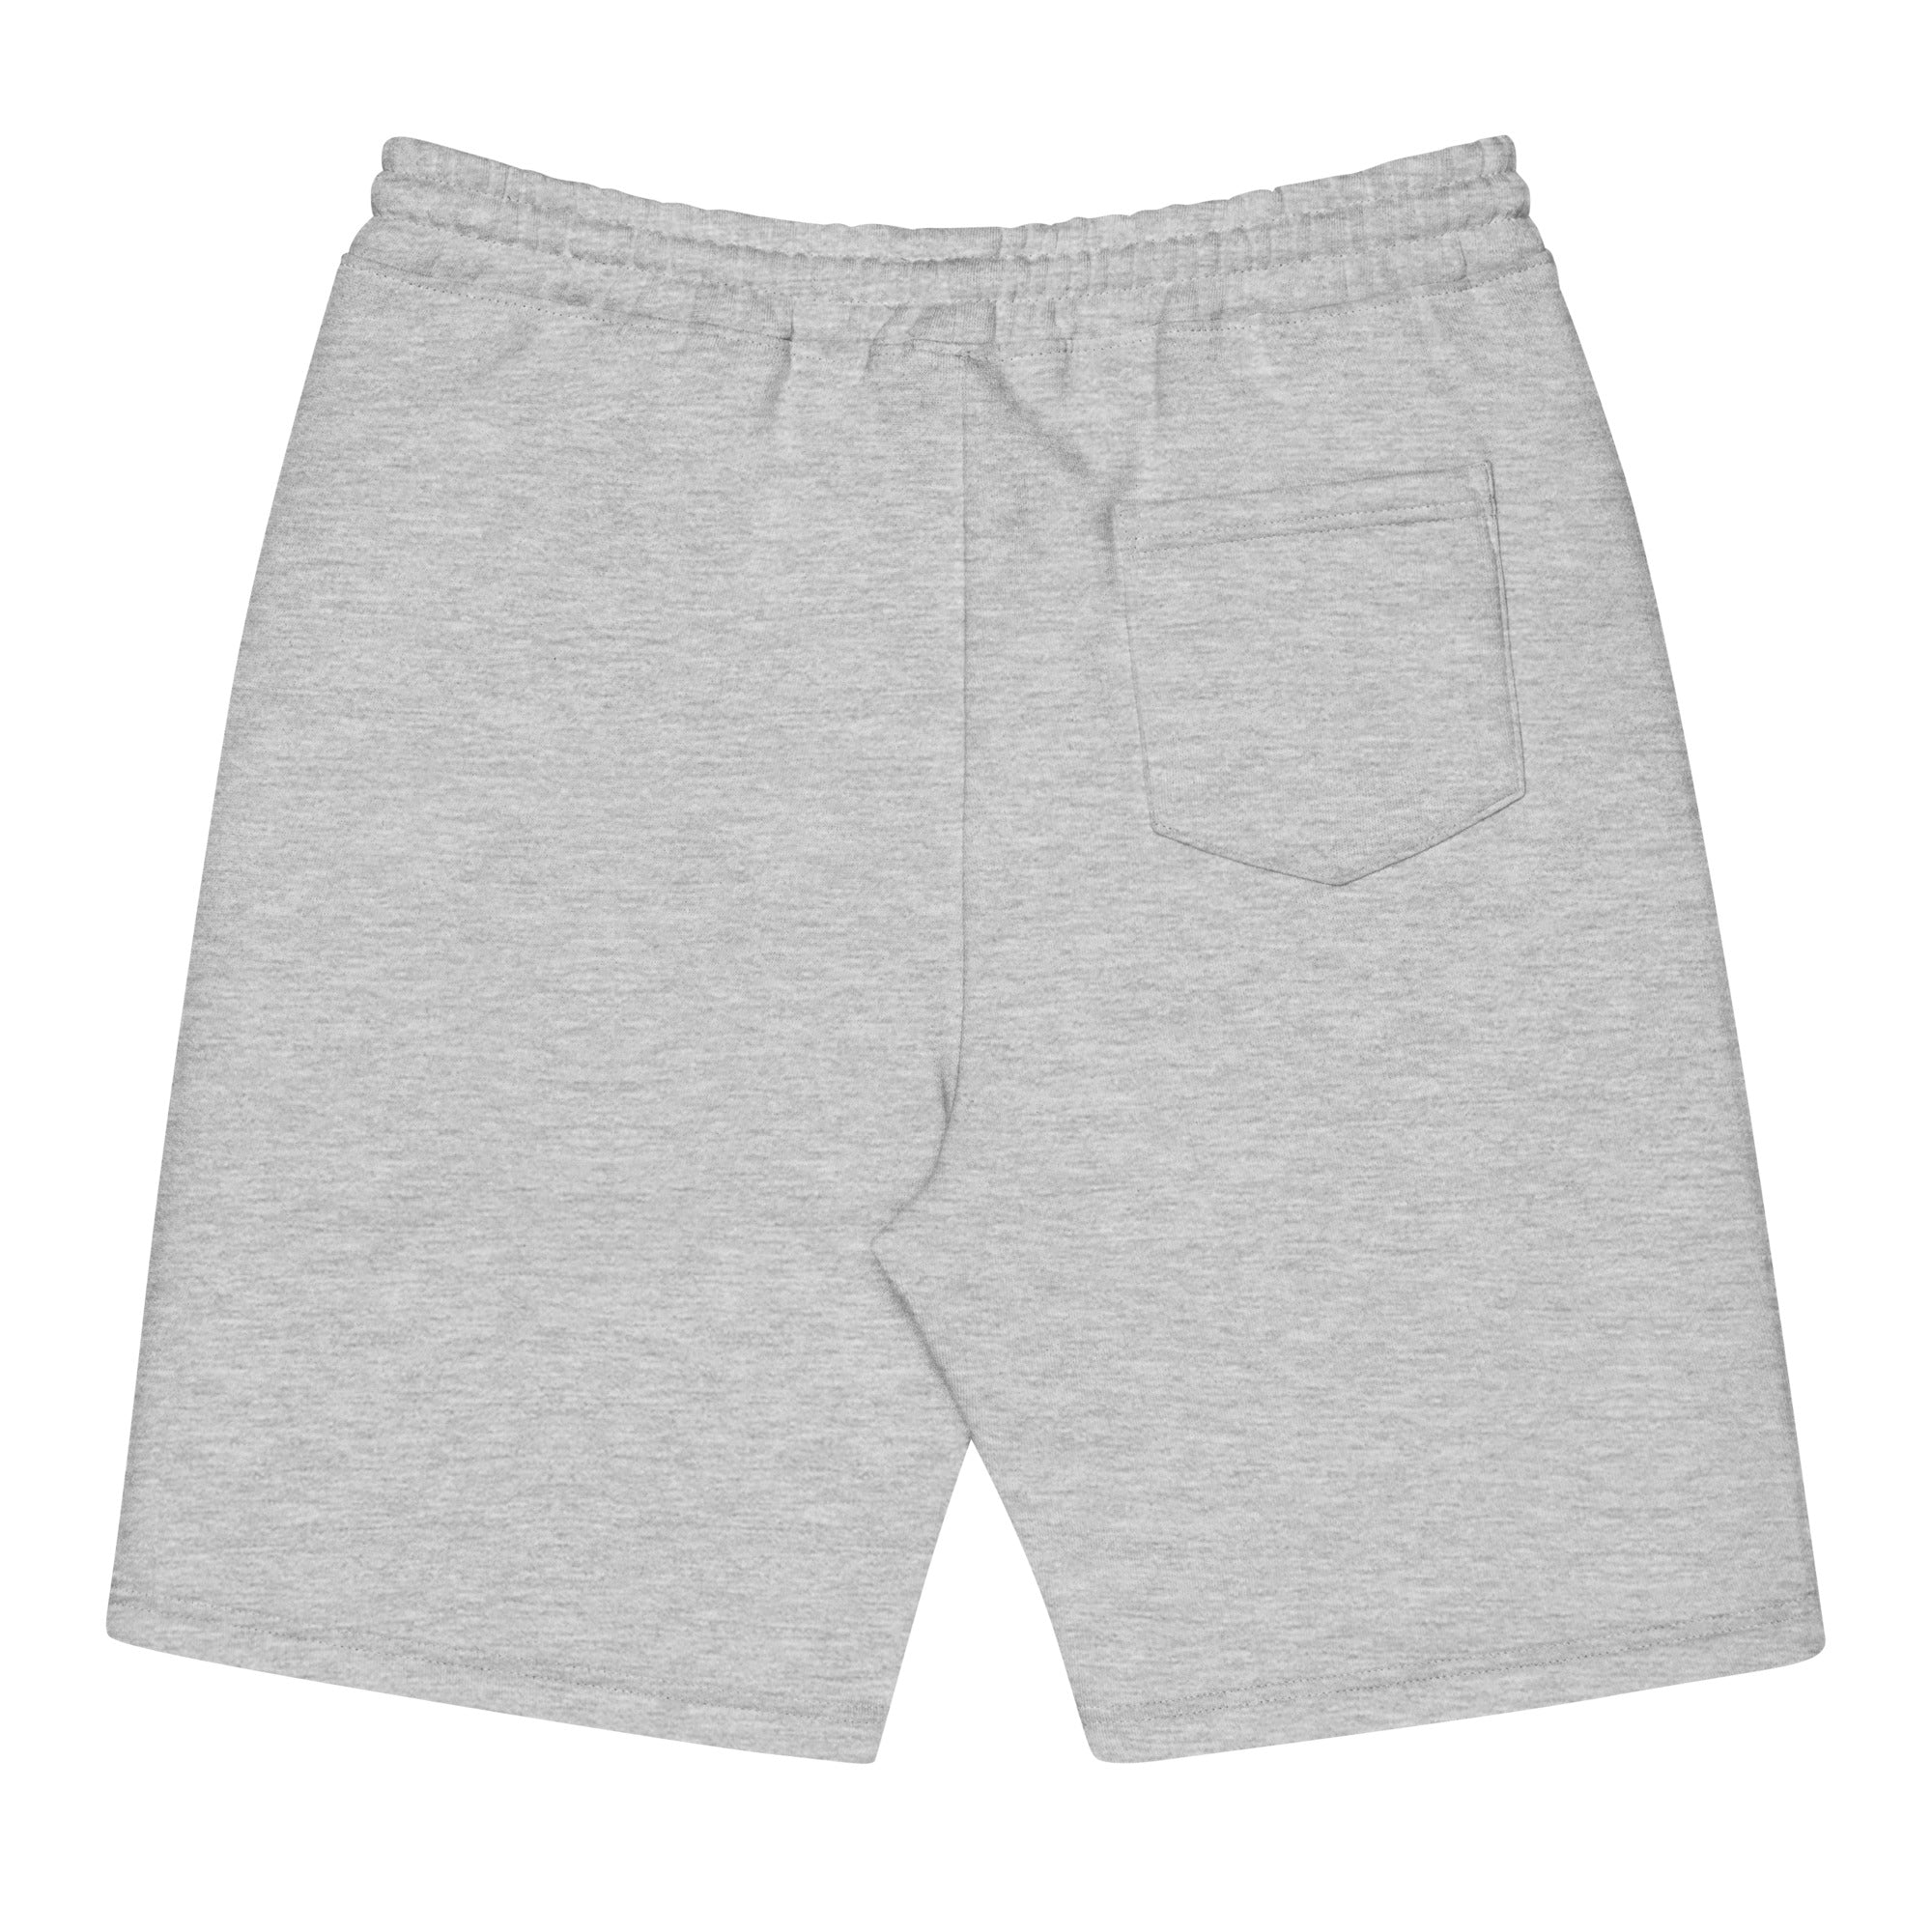 No Step On Snek Embroidered Men's Fleece Shorts